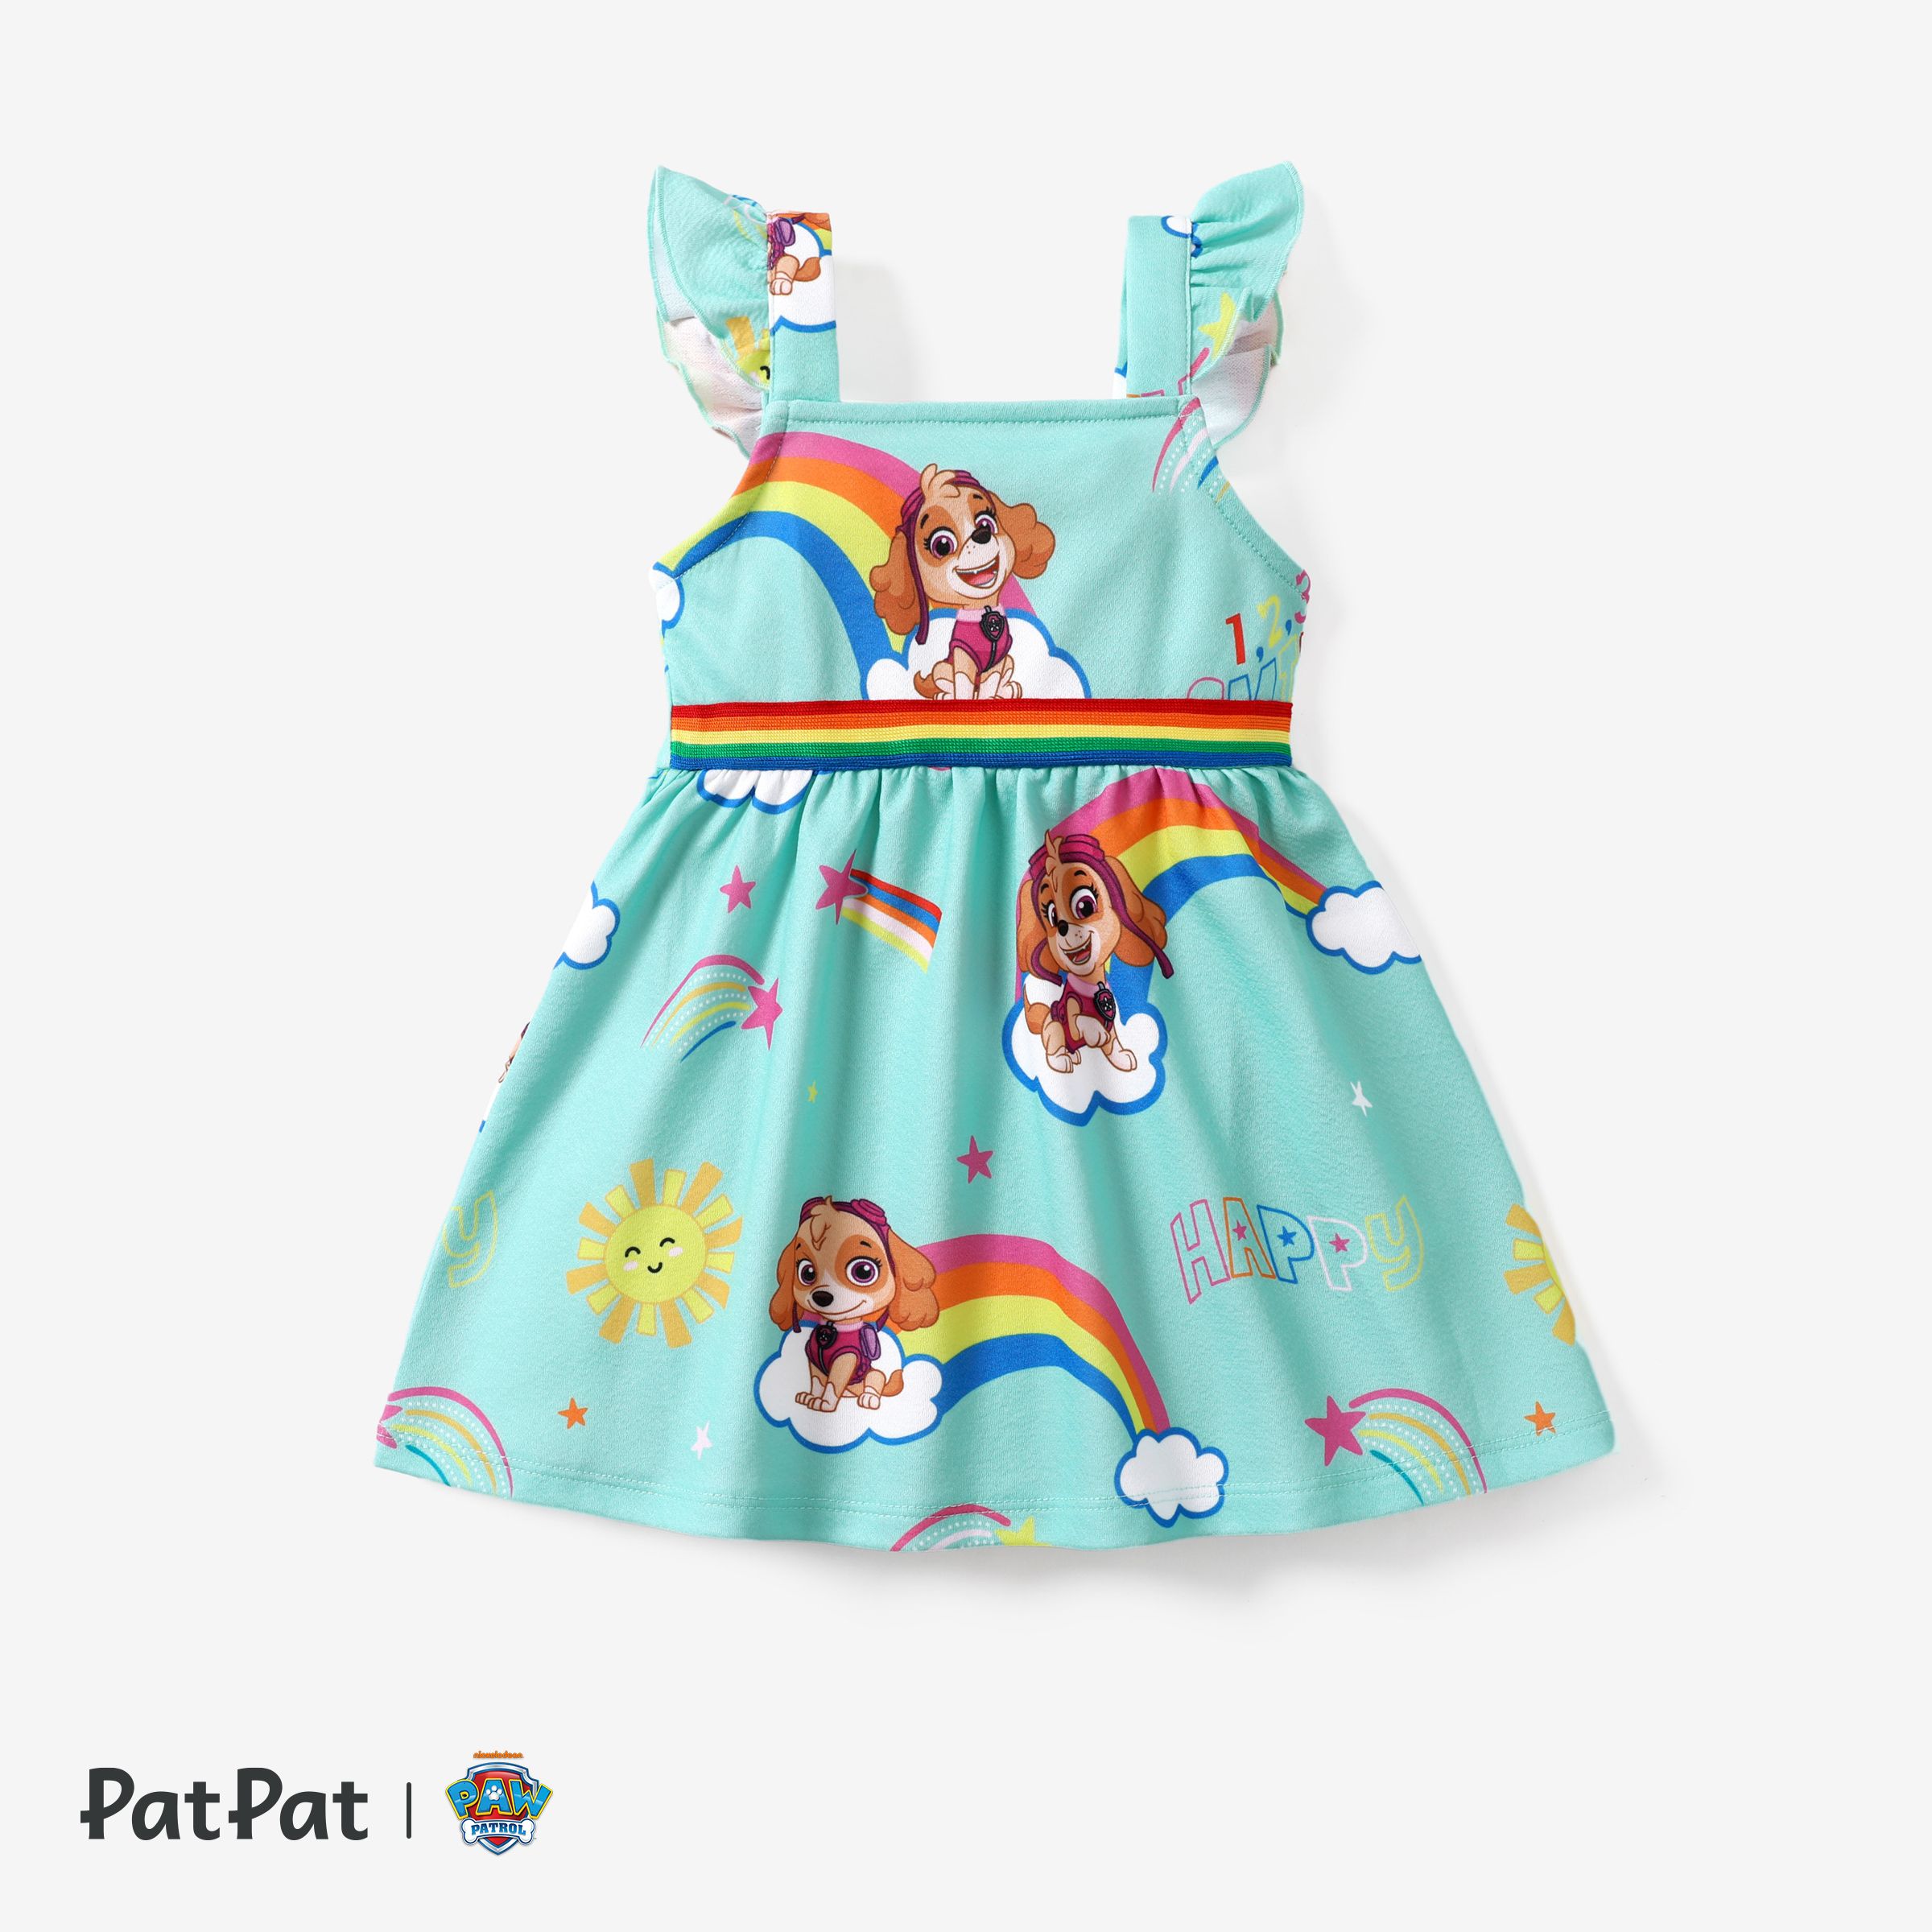 PAW Patrol 1pc Toddler Girls Rainbow Ruffled-Sleeve Dress